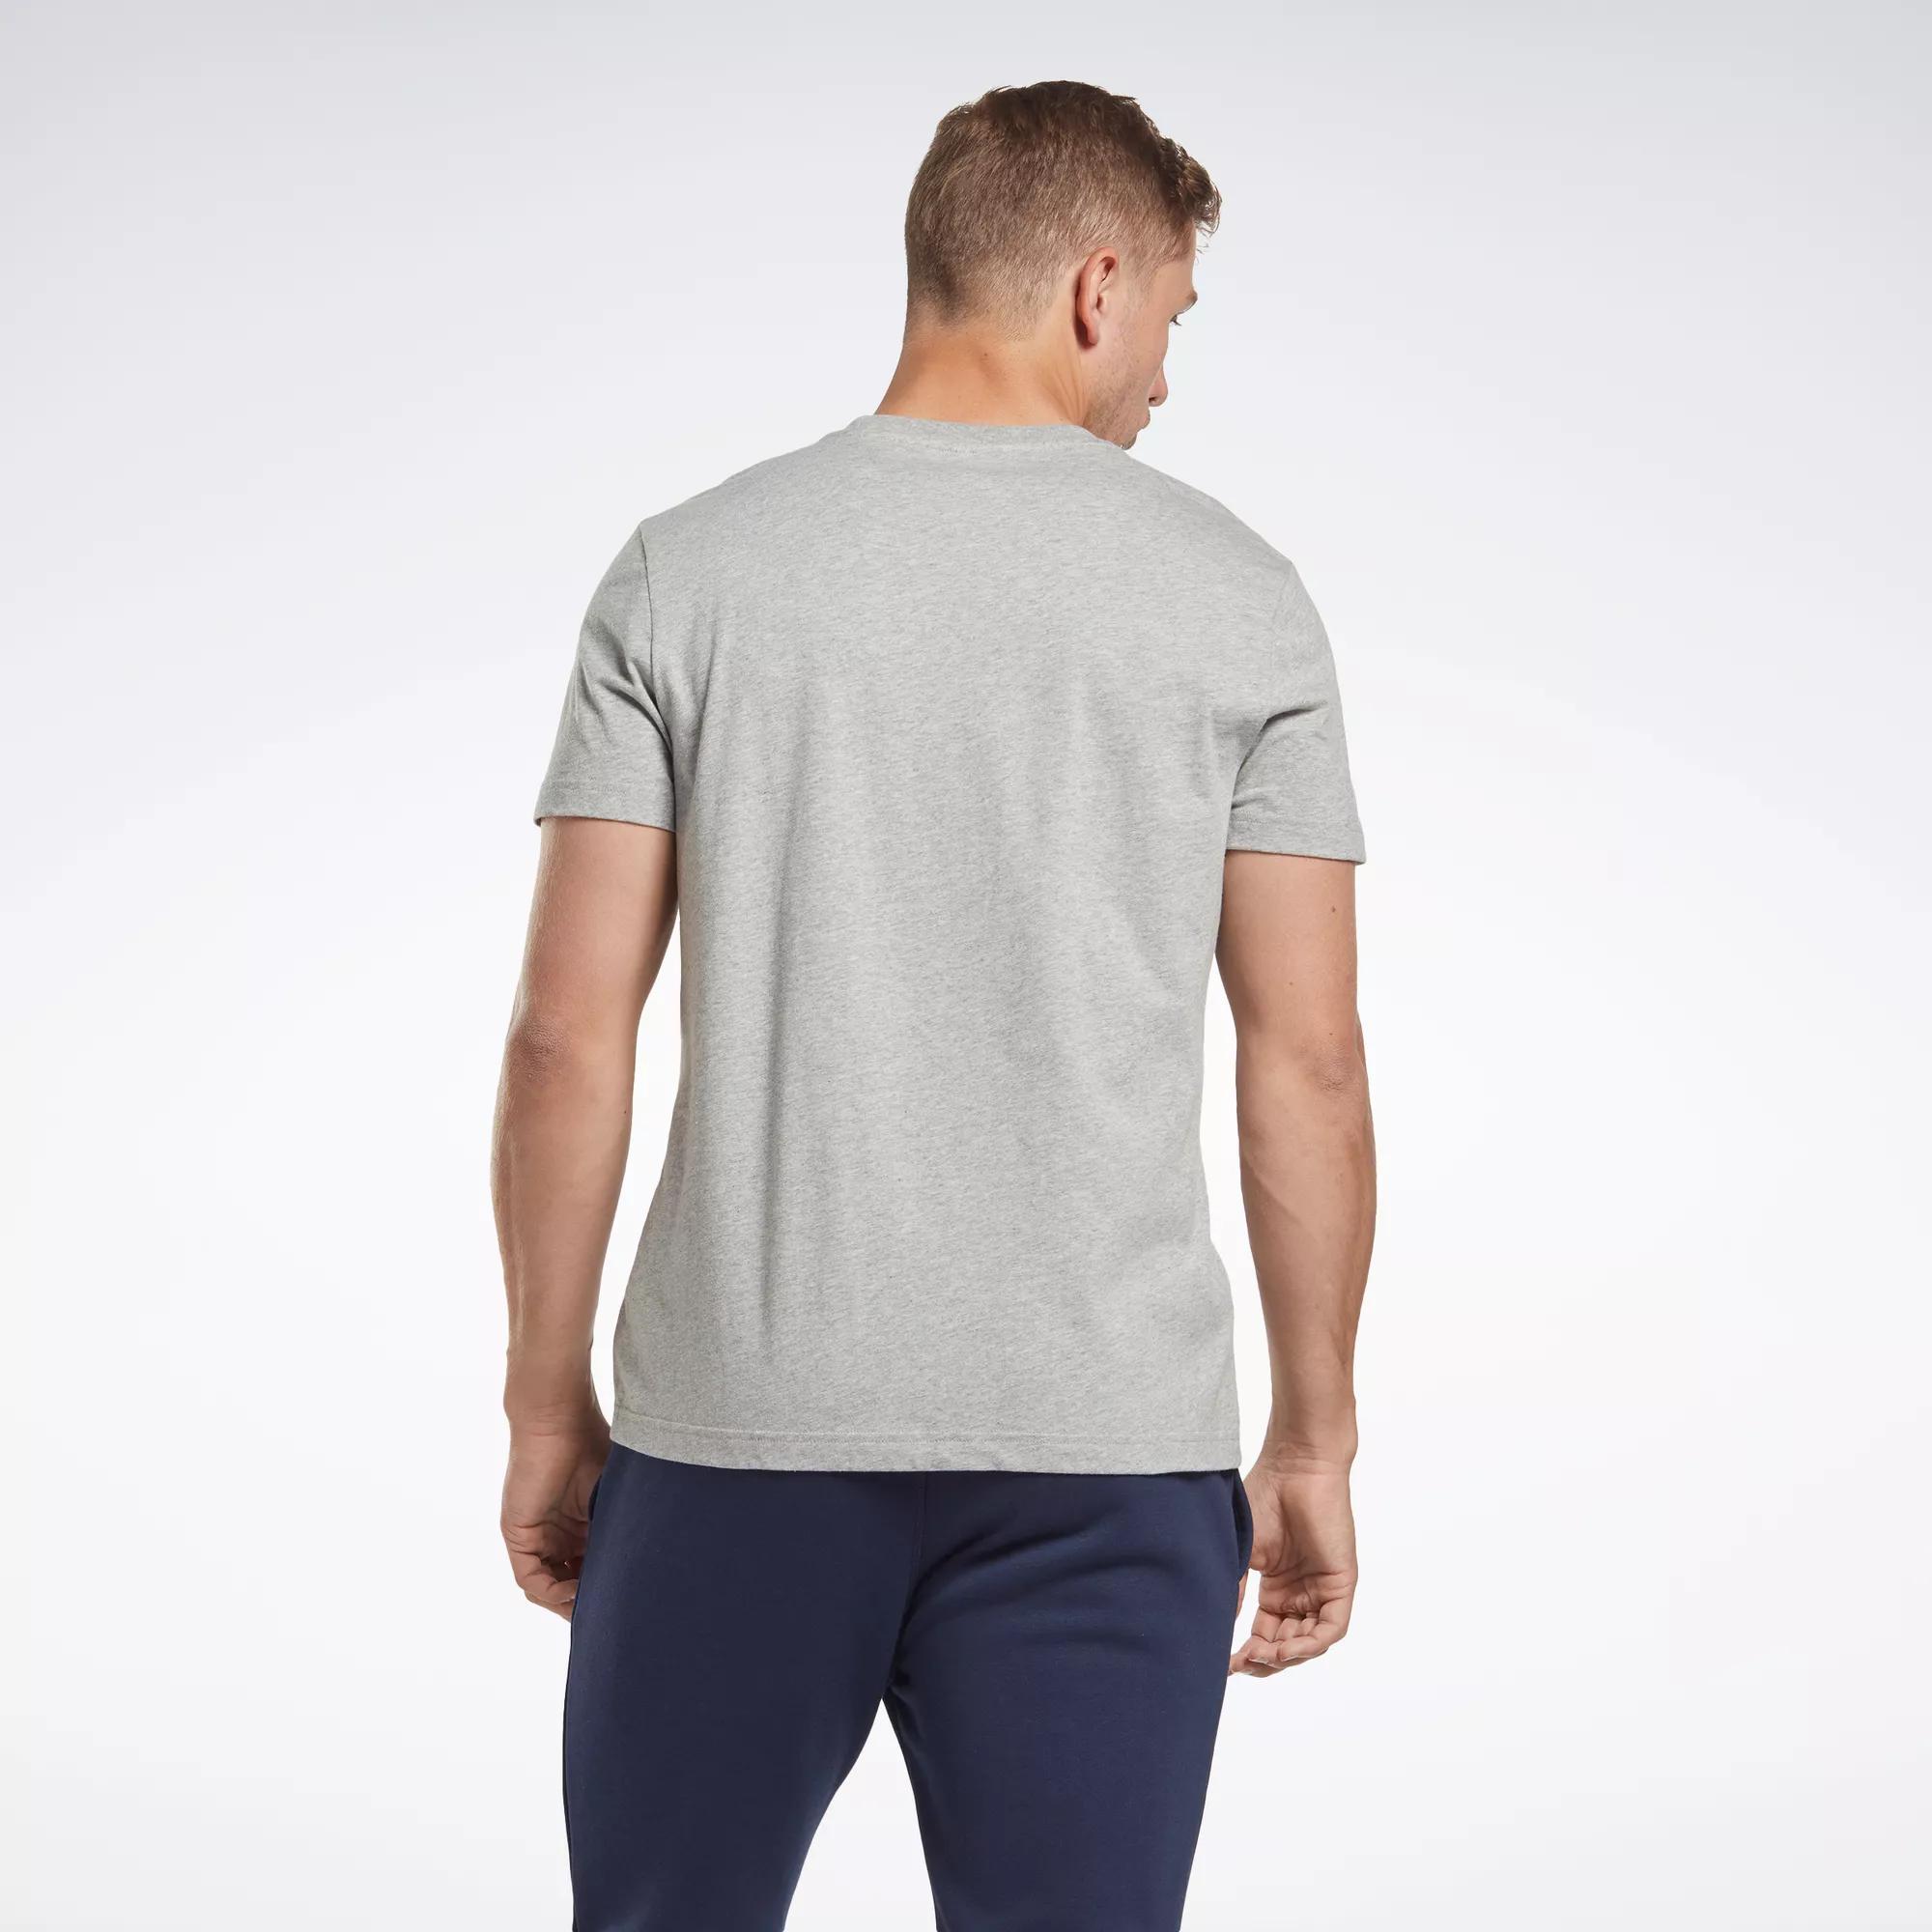 Reebok Identity Classics T-Shirt - Medium Grey Heather | Reebok